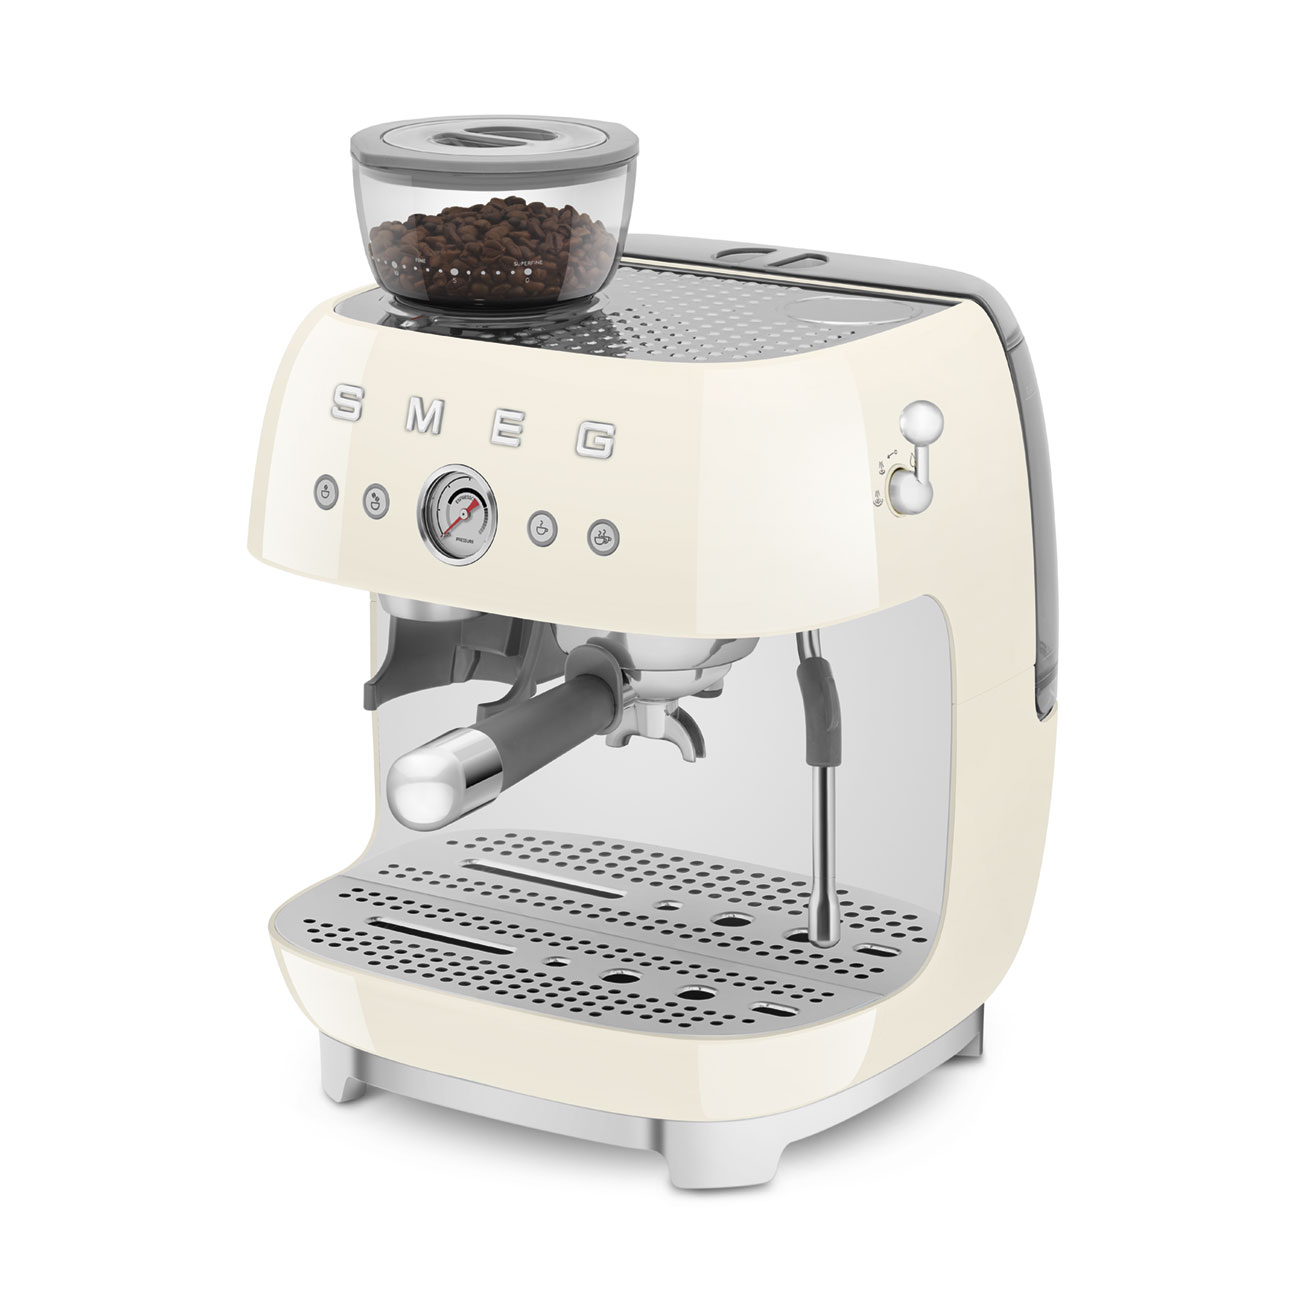 Smeg Cream Espresso Manual Coffee Machine with Grinder_9